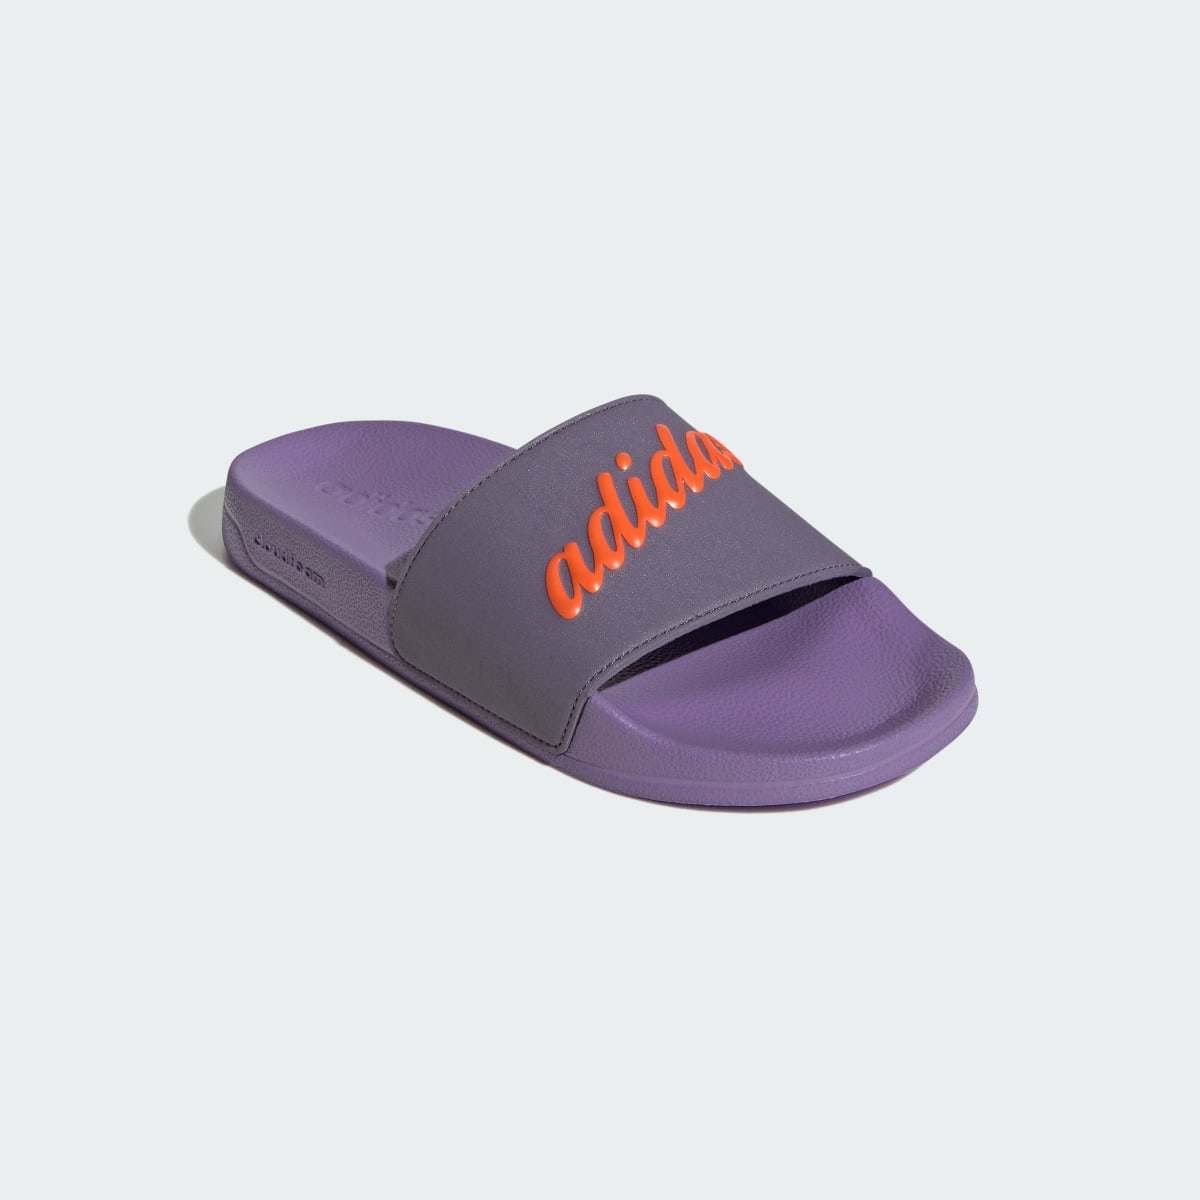 Adidas adilette Shower Slides. 5